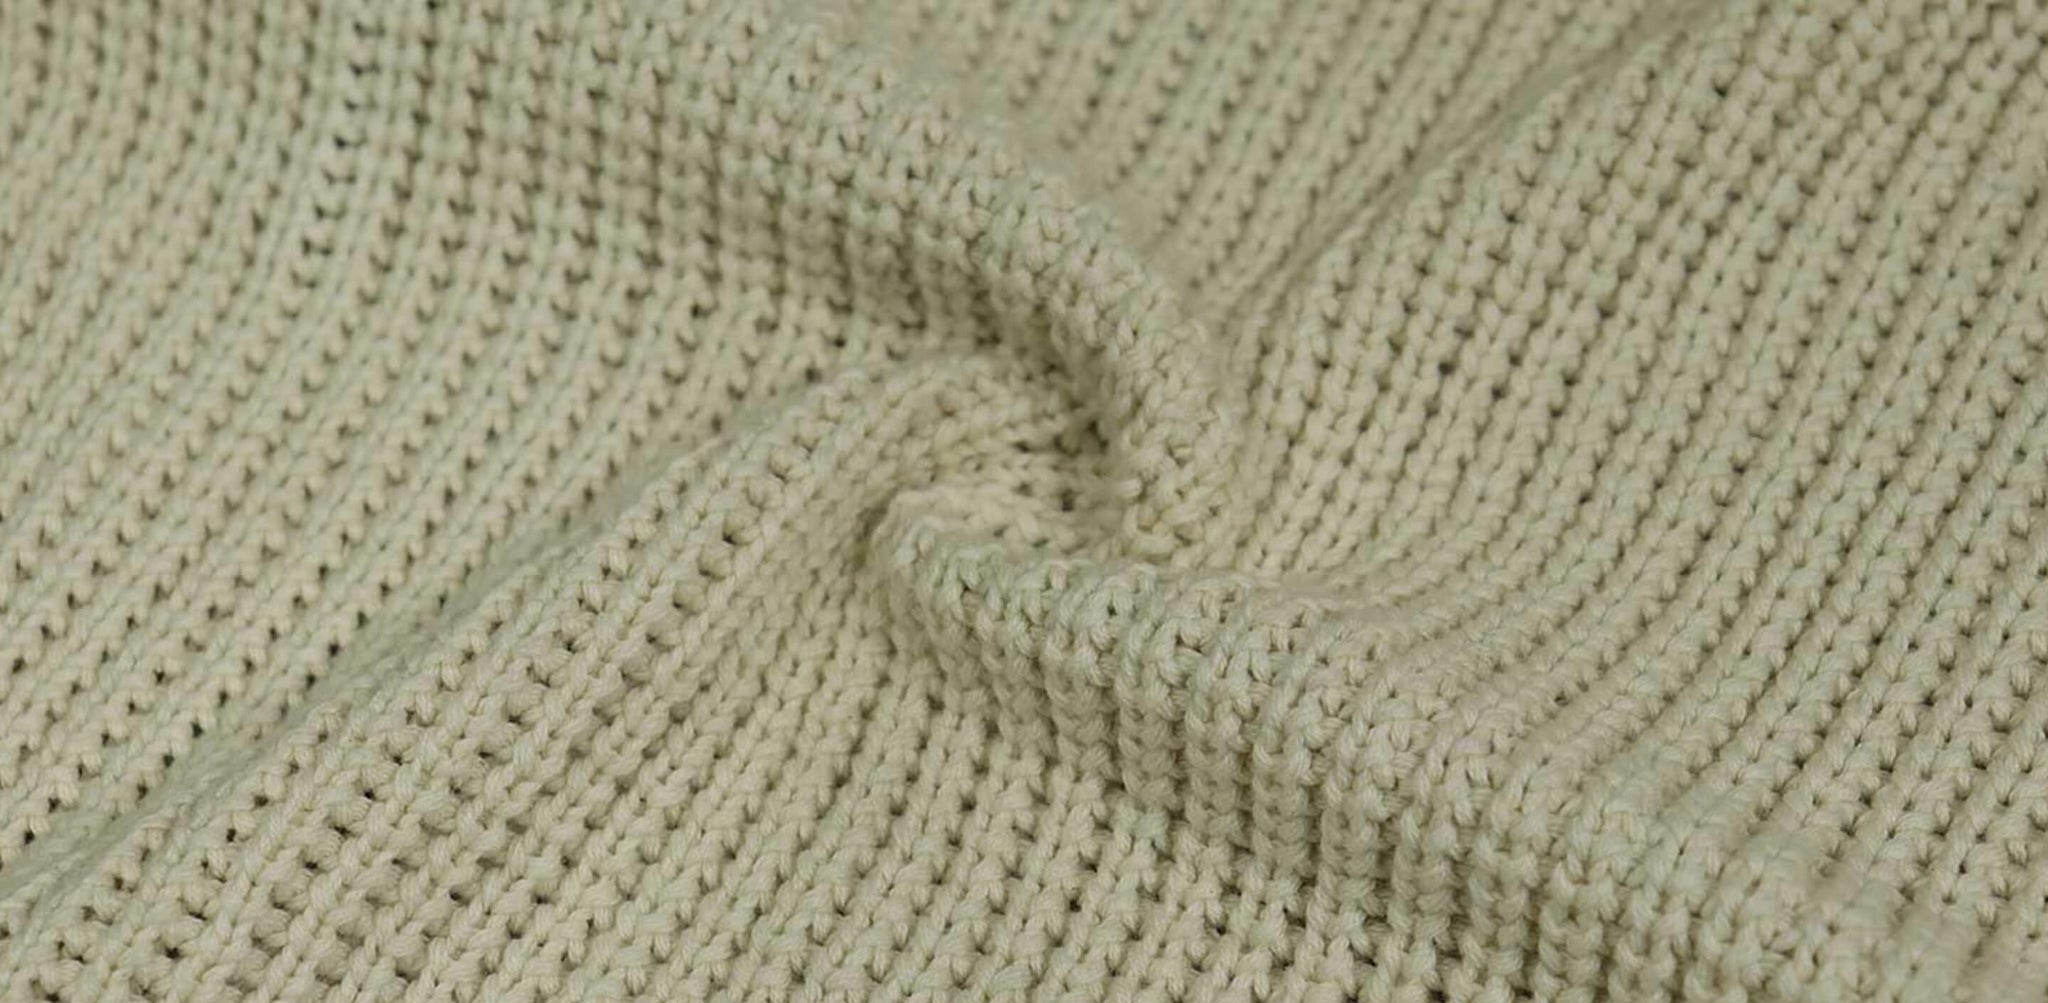 Stretch Woven Fabric  Lightweight & Comfortable Fabric